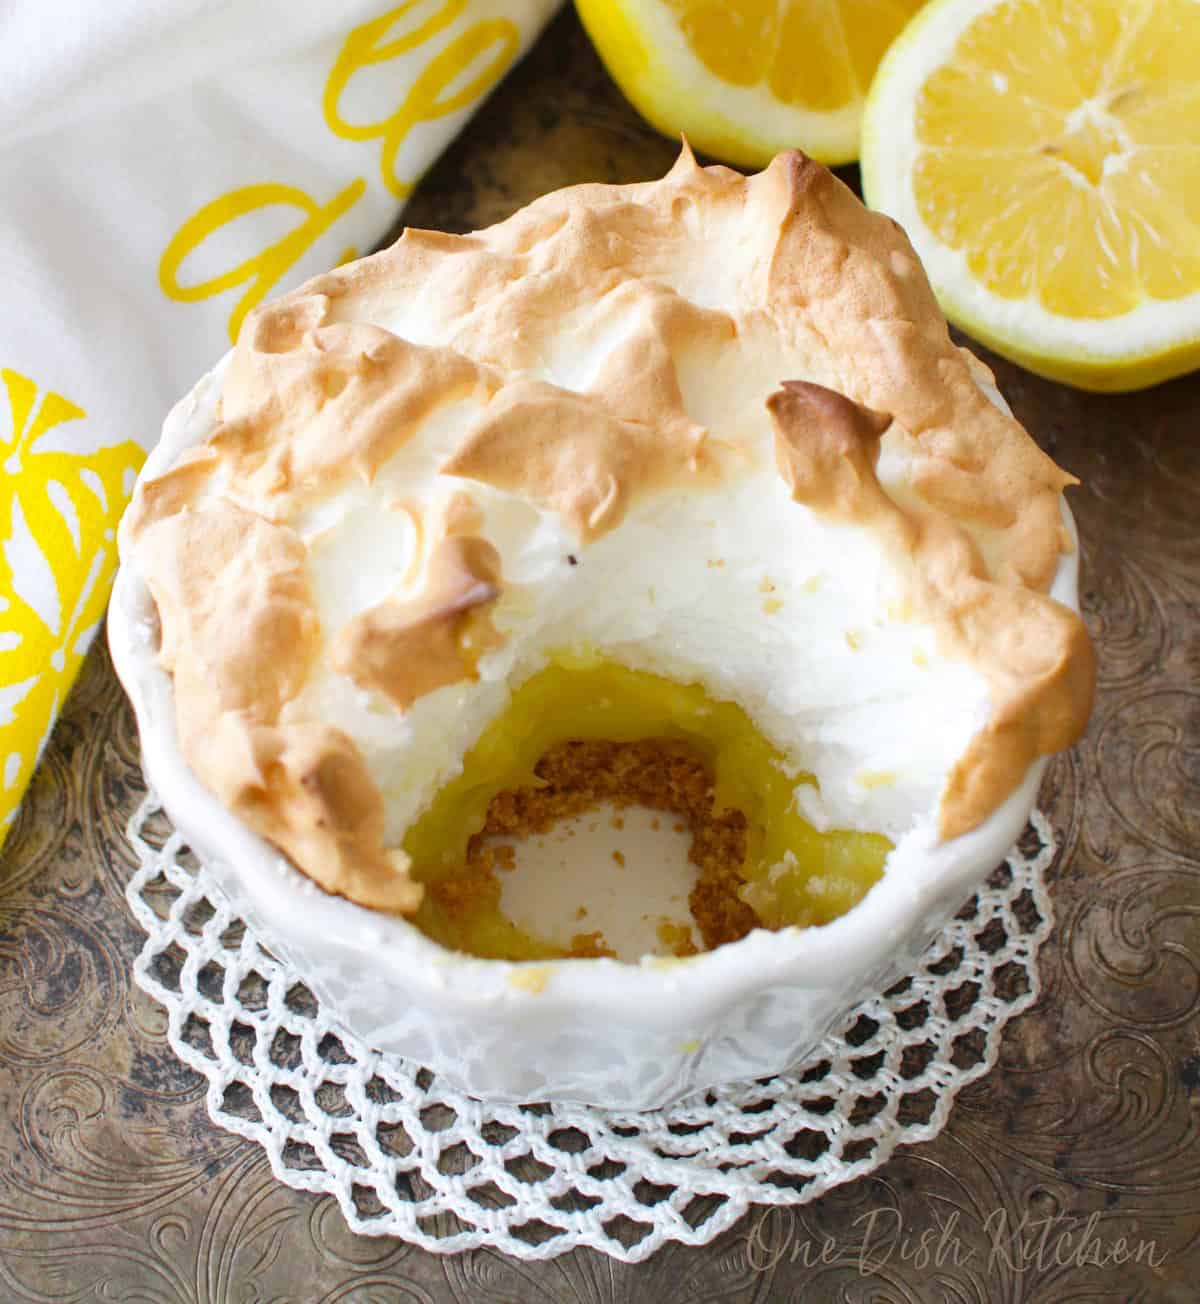 a partially eaten small lemon meringue pie on a silver tray next to a lemon.